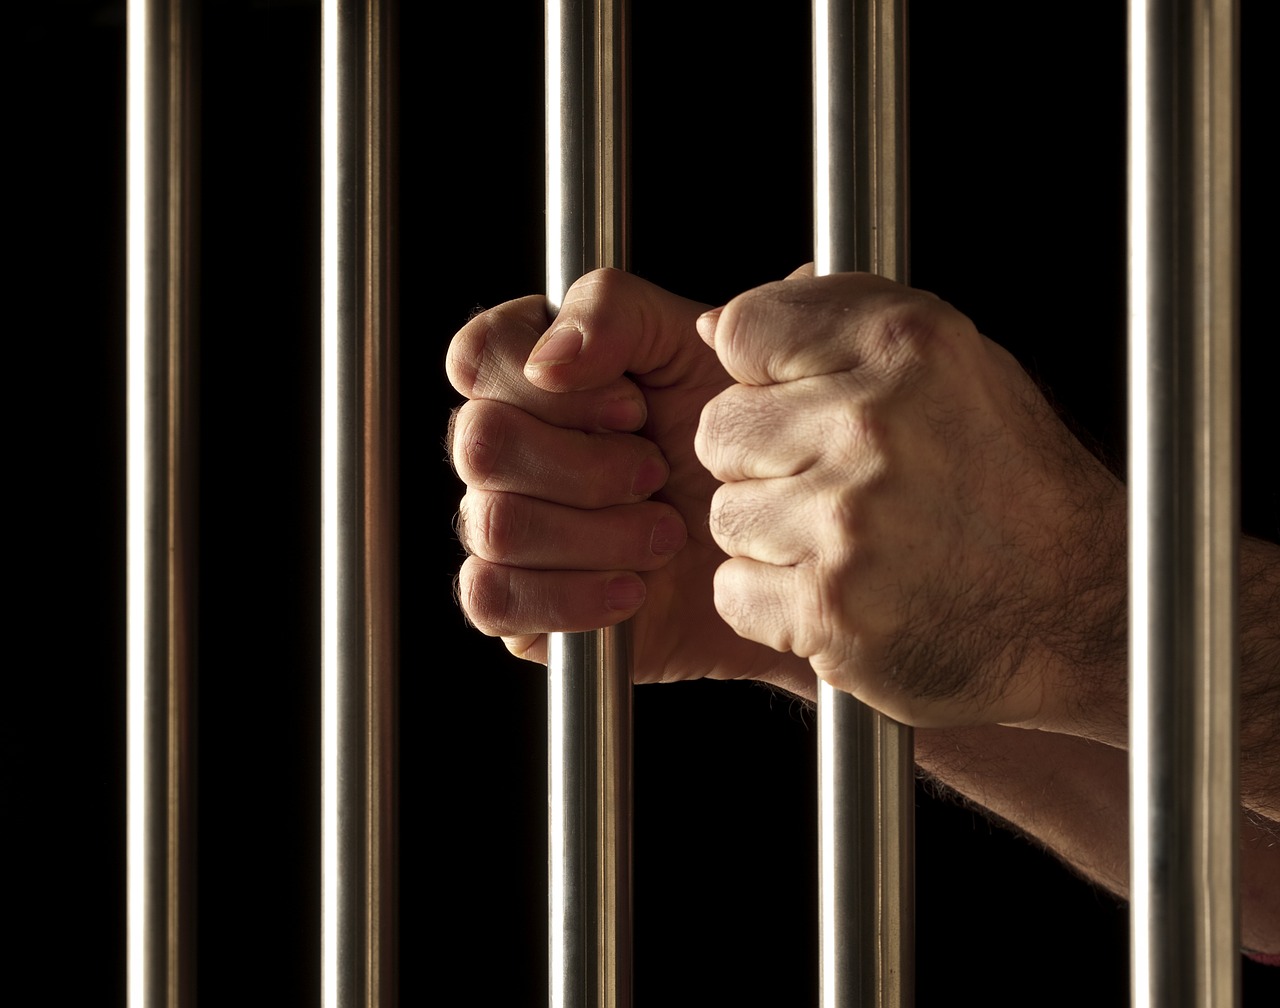 Hands clutching prison bars